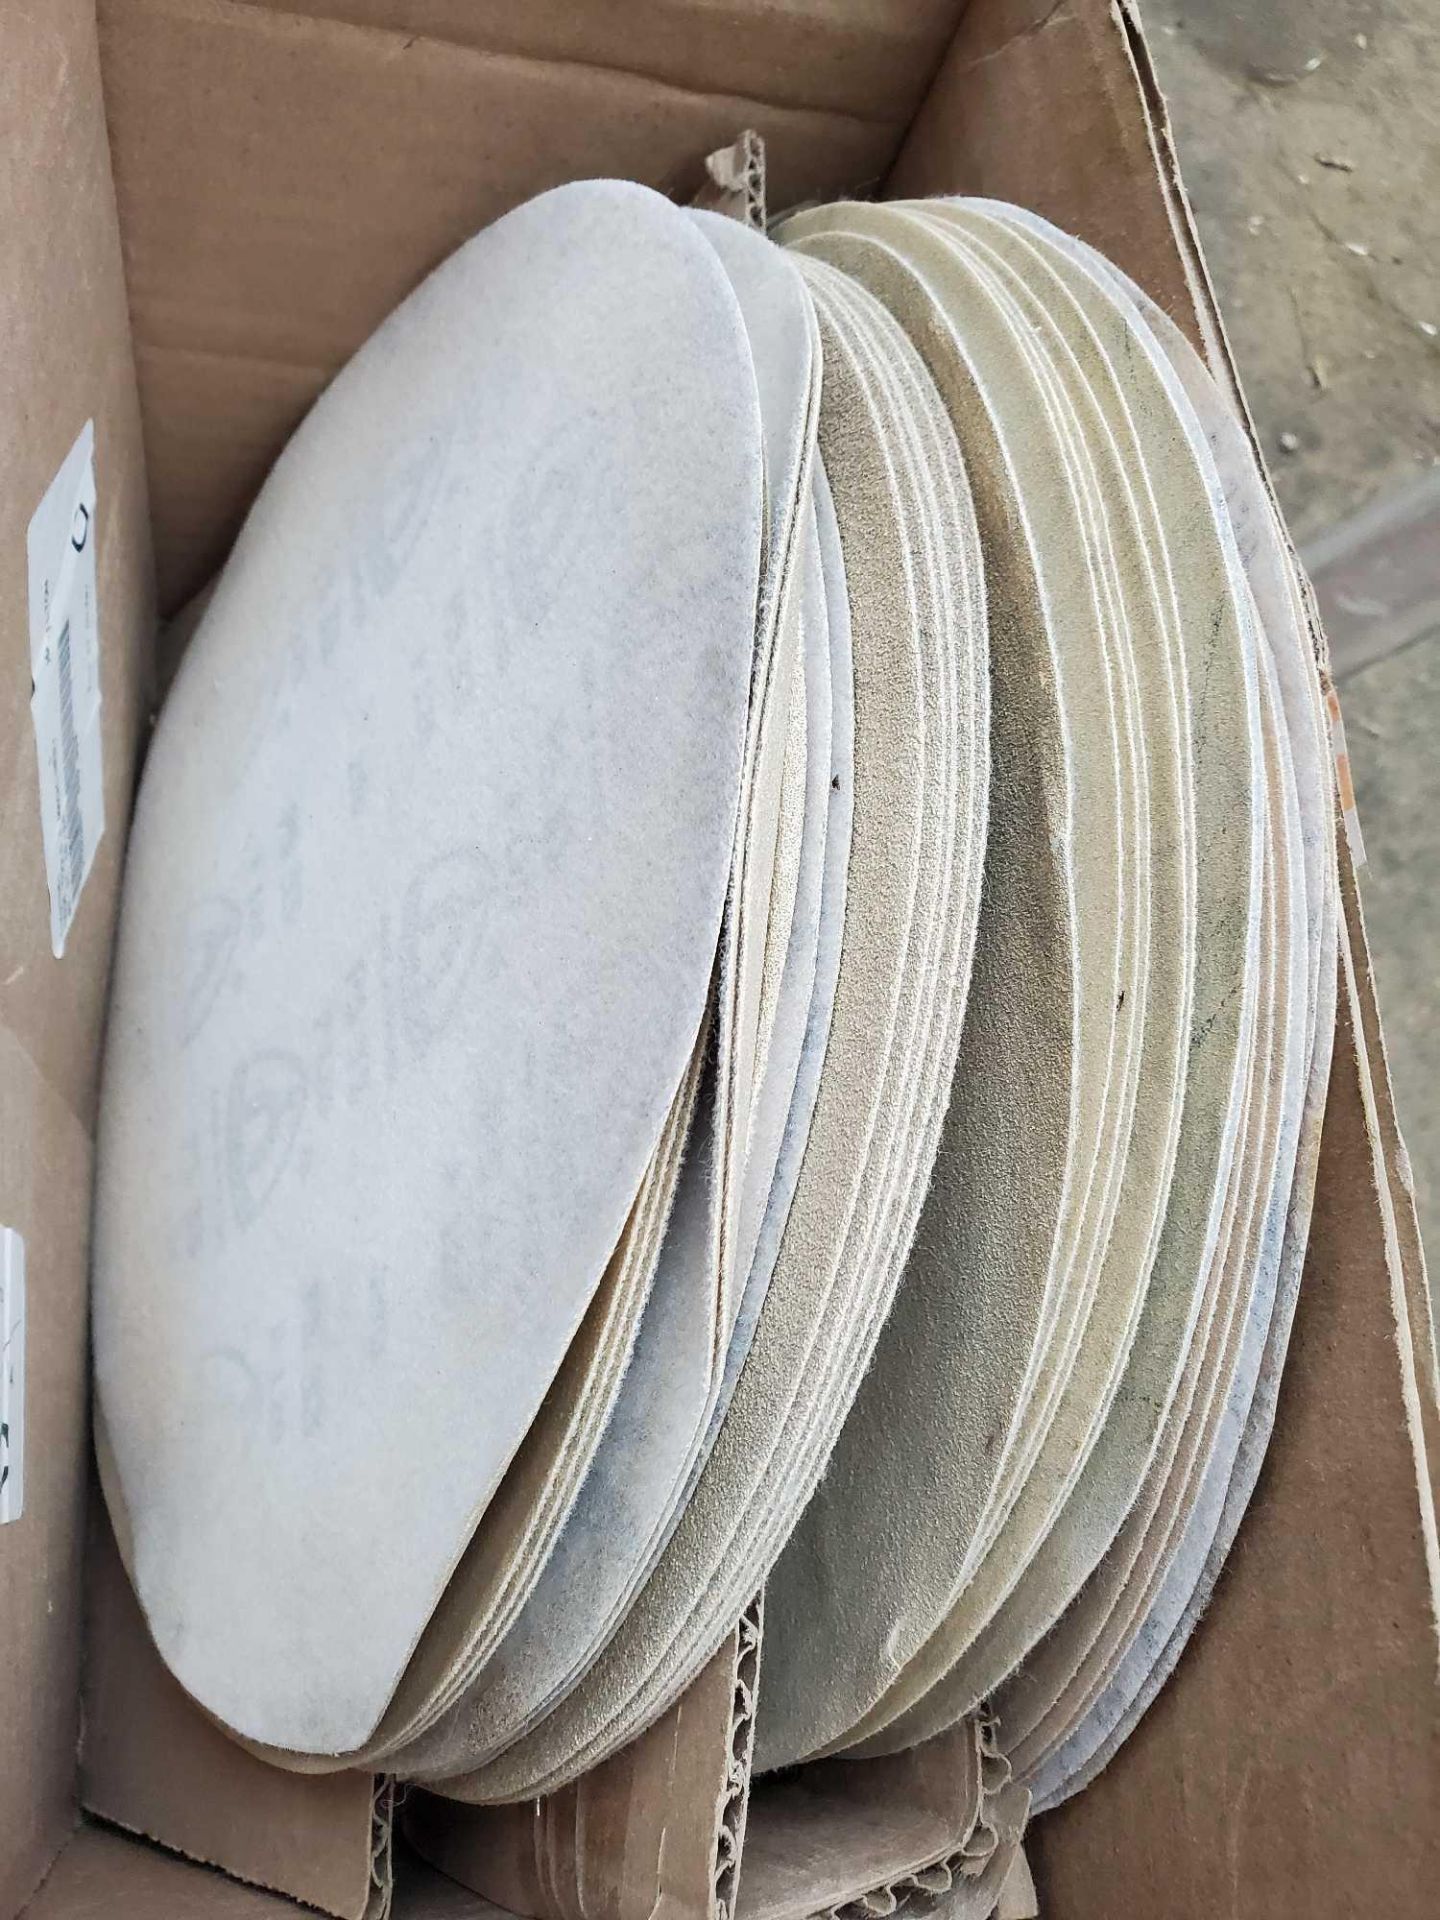 lot of klingspor sanding discs / lot de disques de sablage klingspor